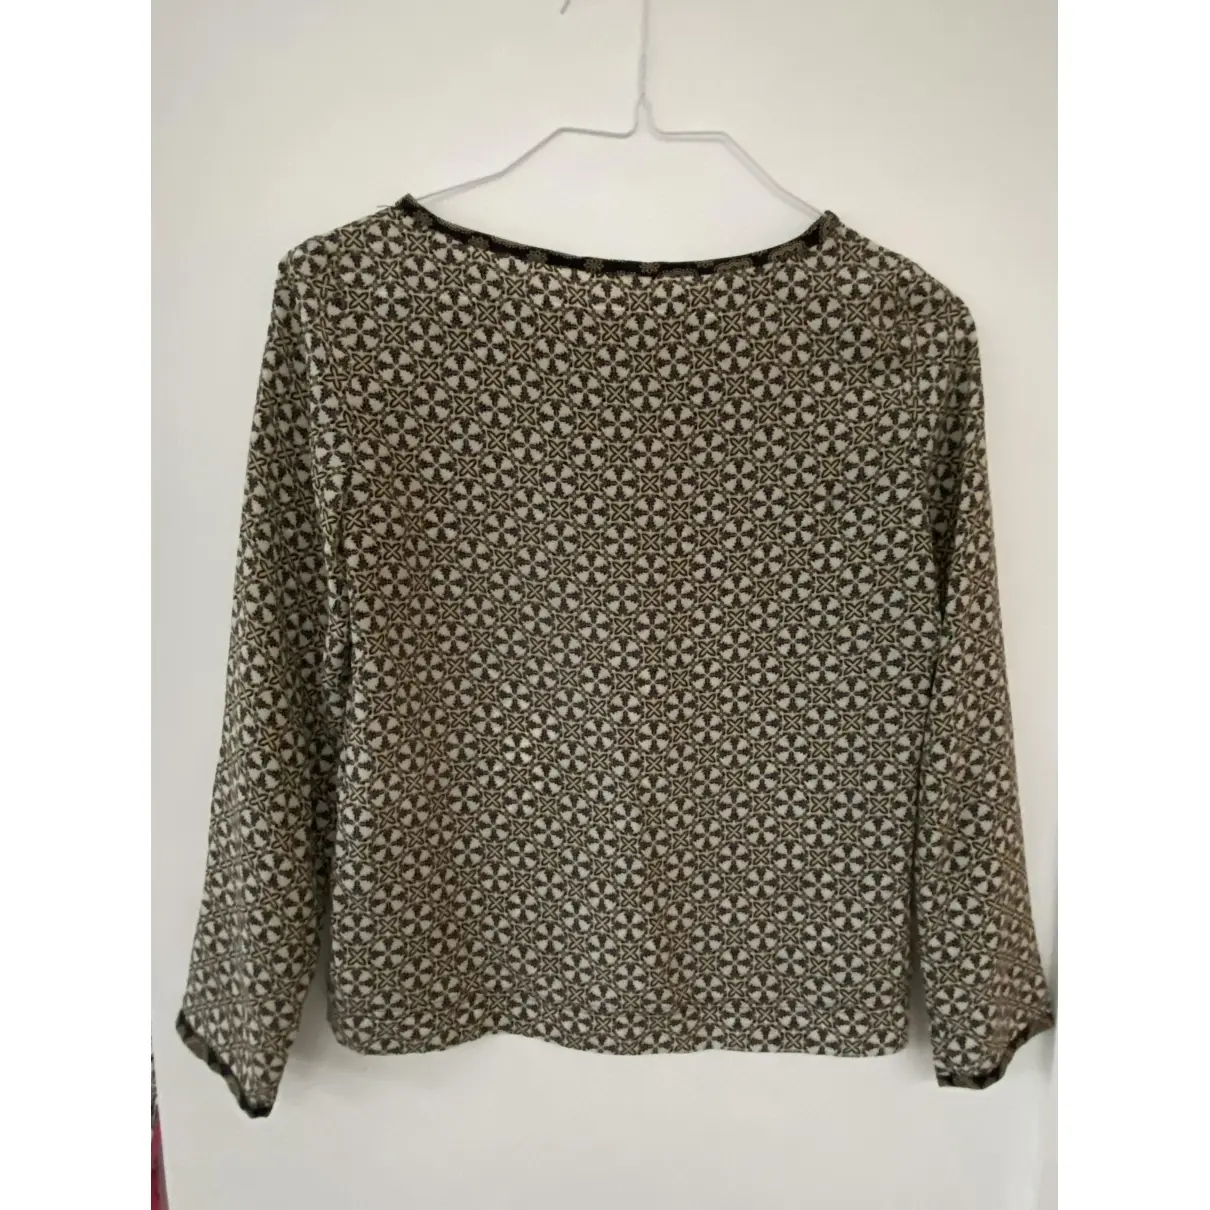 Masscob Silk blouse for sale